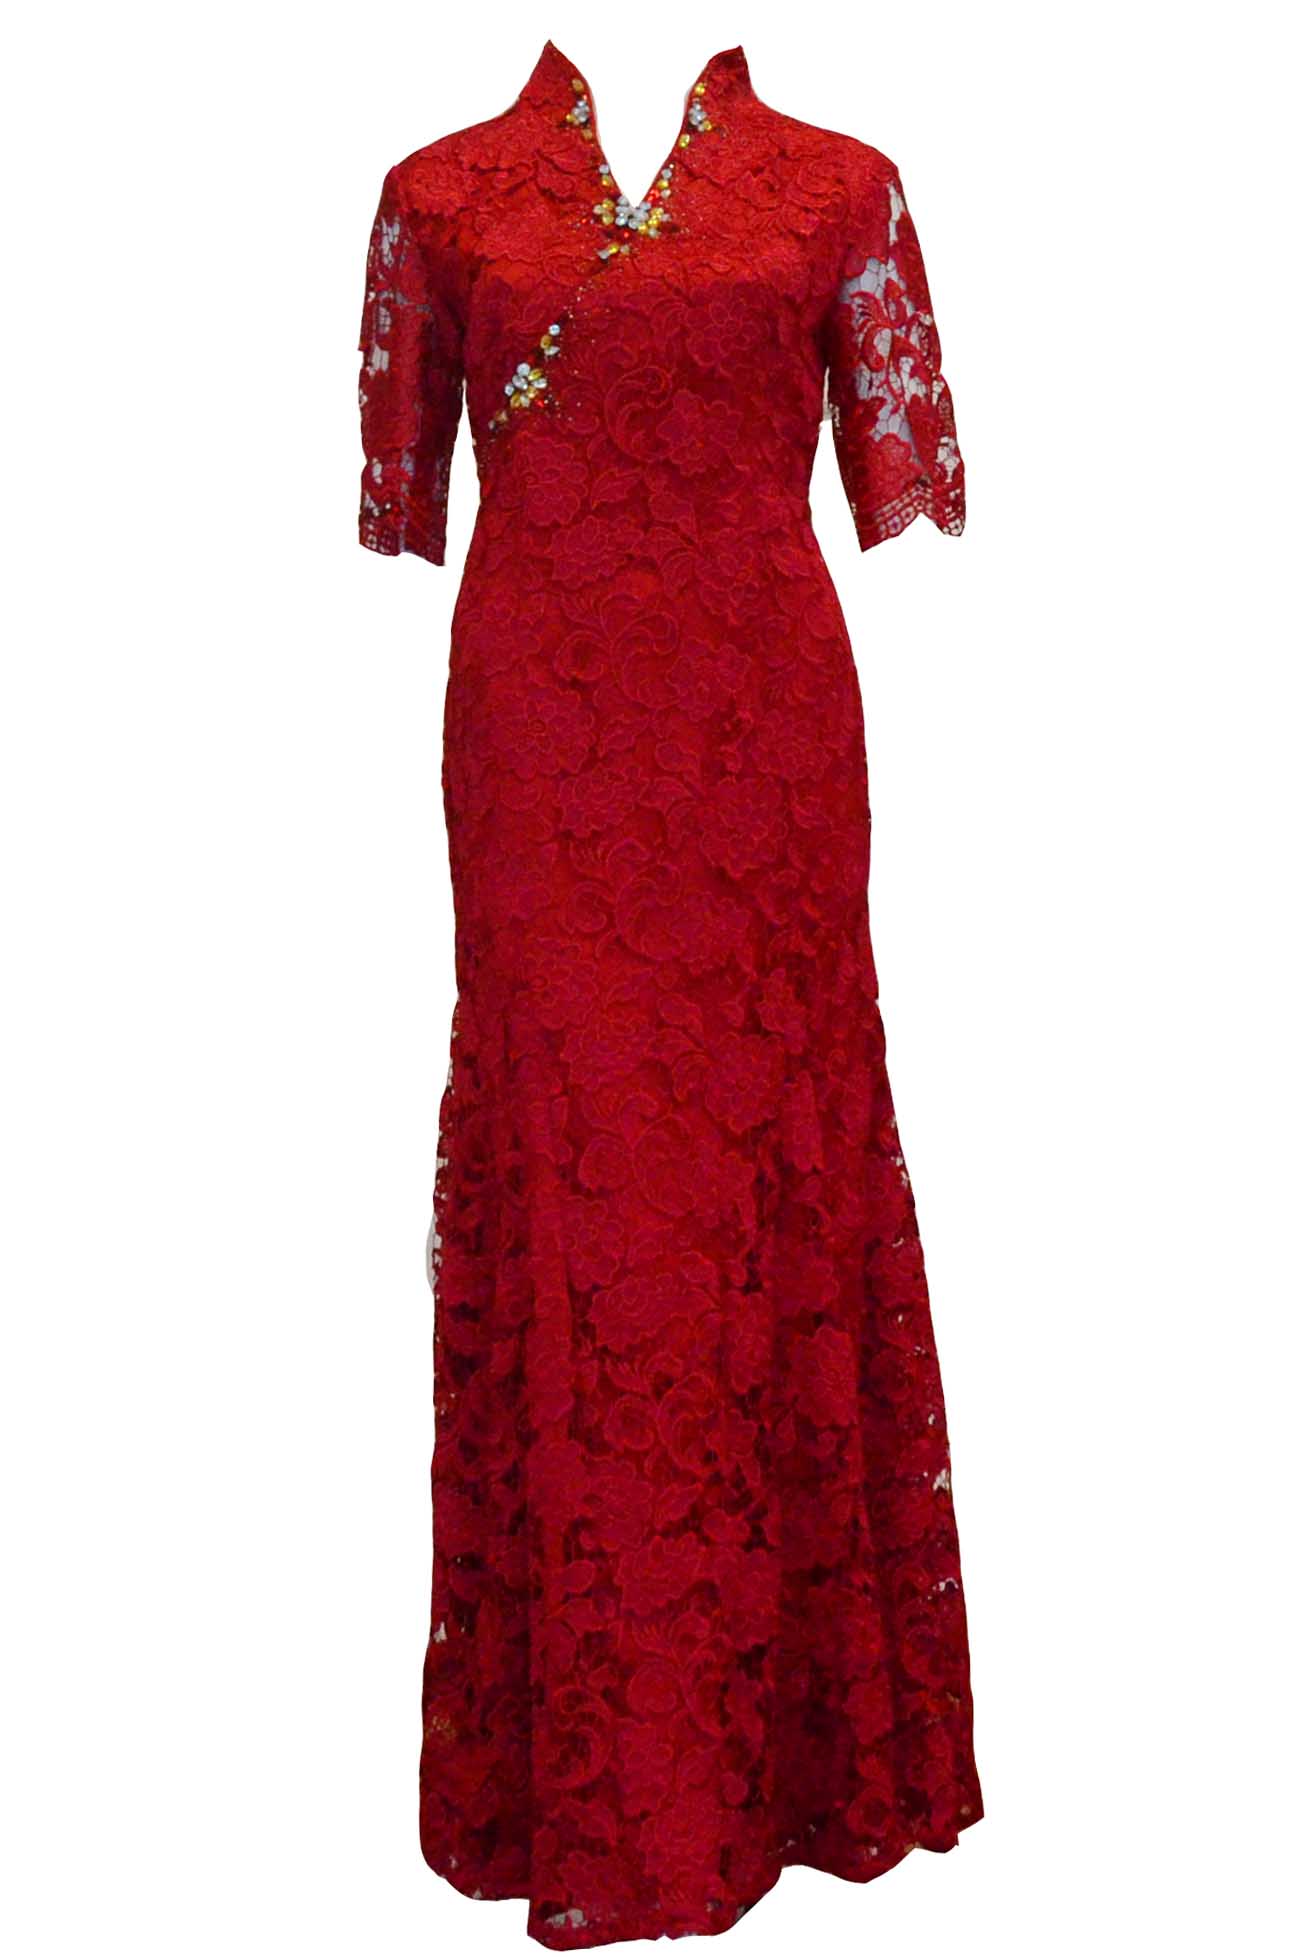 Rent : Mandarin Peony - Red 3/4 Sleeves Brocade Cheongsam Dress